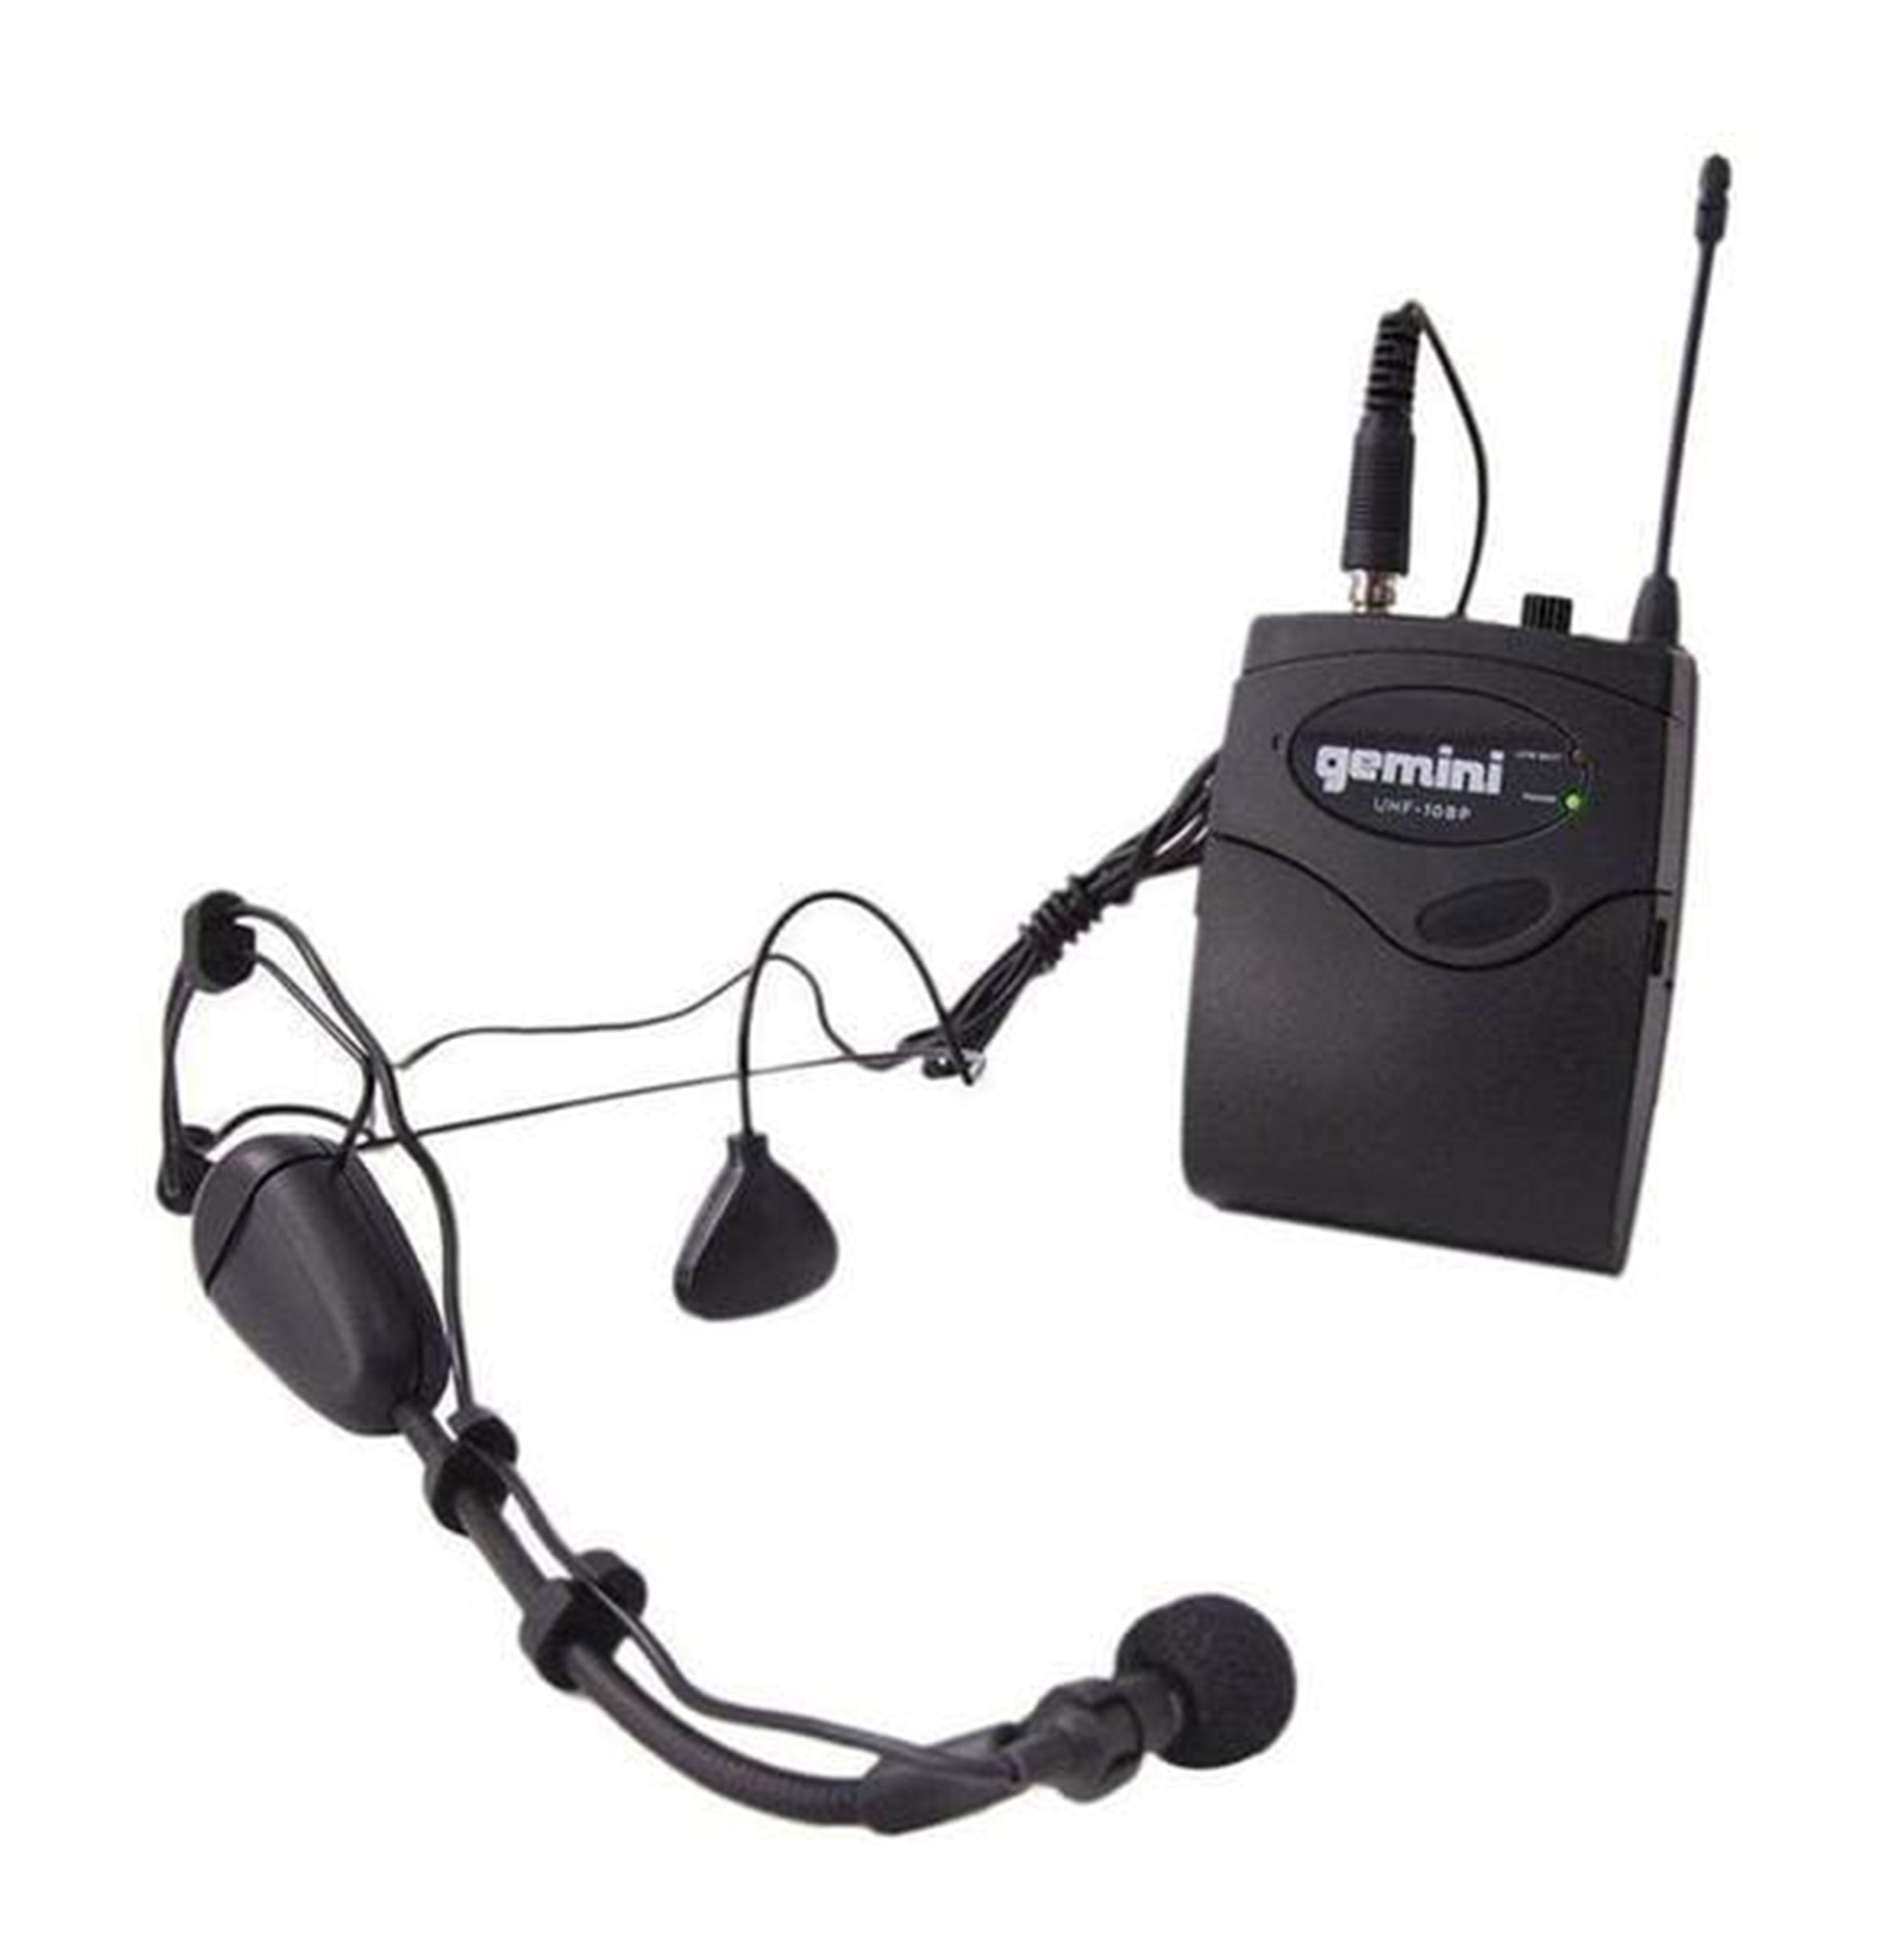 Gemini Sound UHF-01HL-F3 Wireless Microphone System - Frequency: F3 533.7 - Hollywood DJ